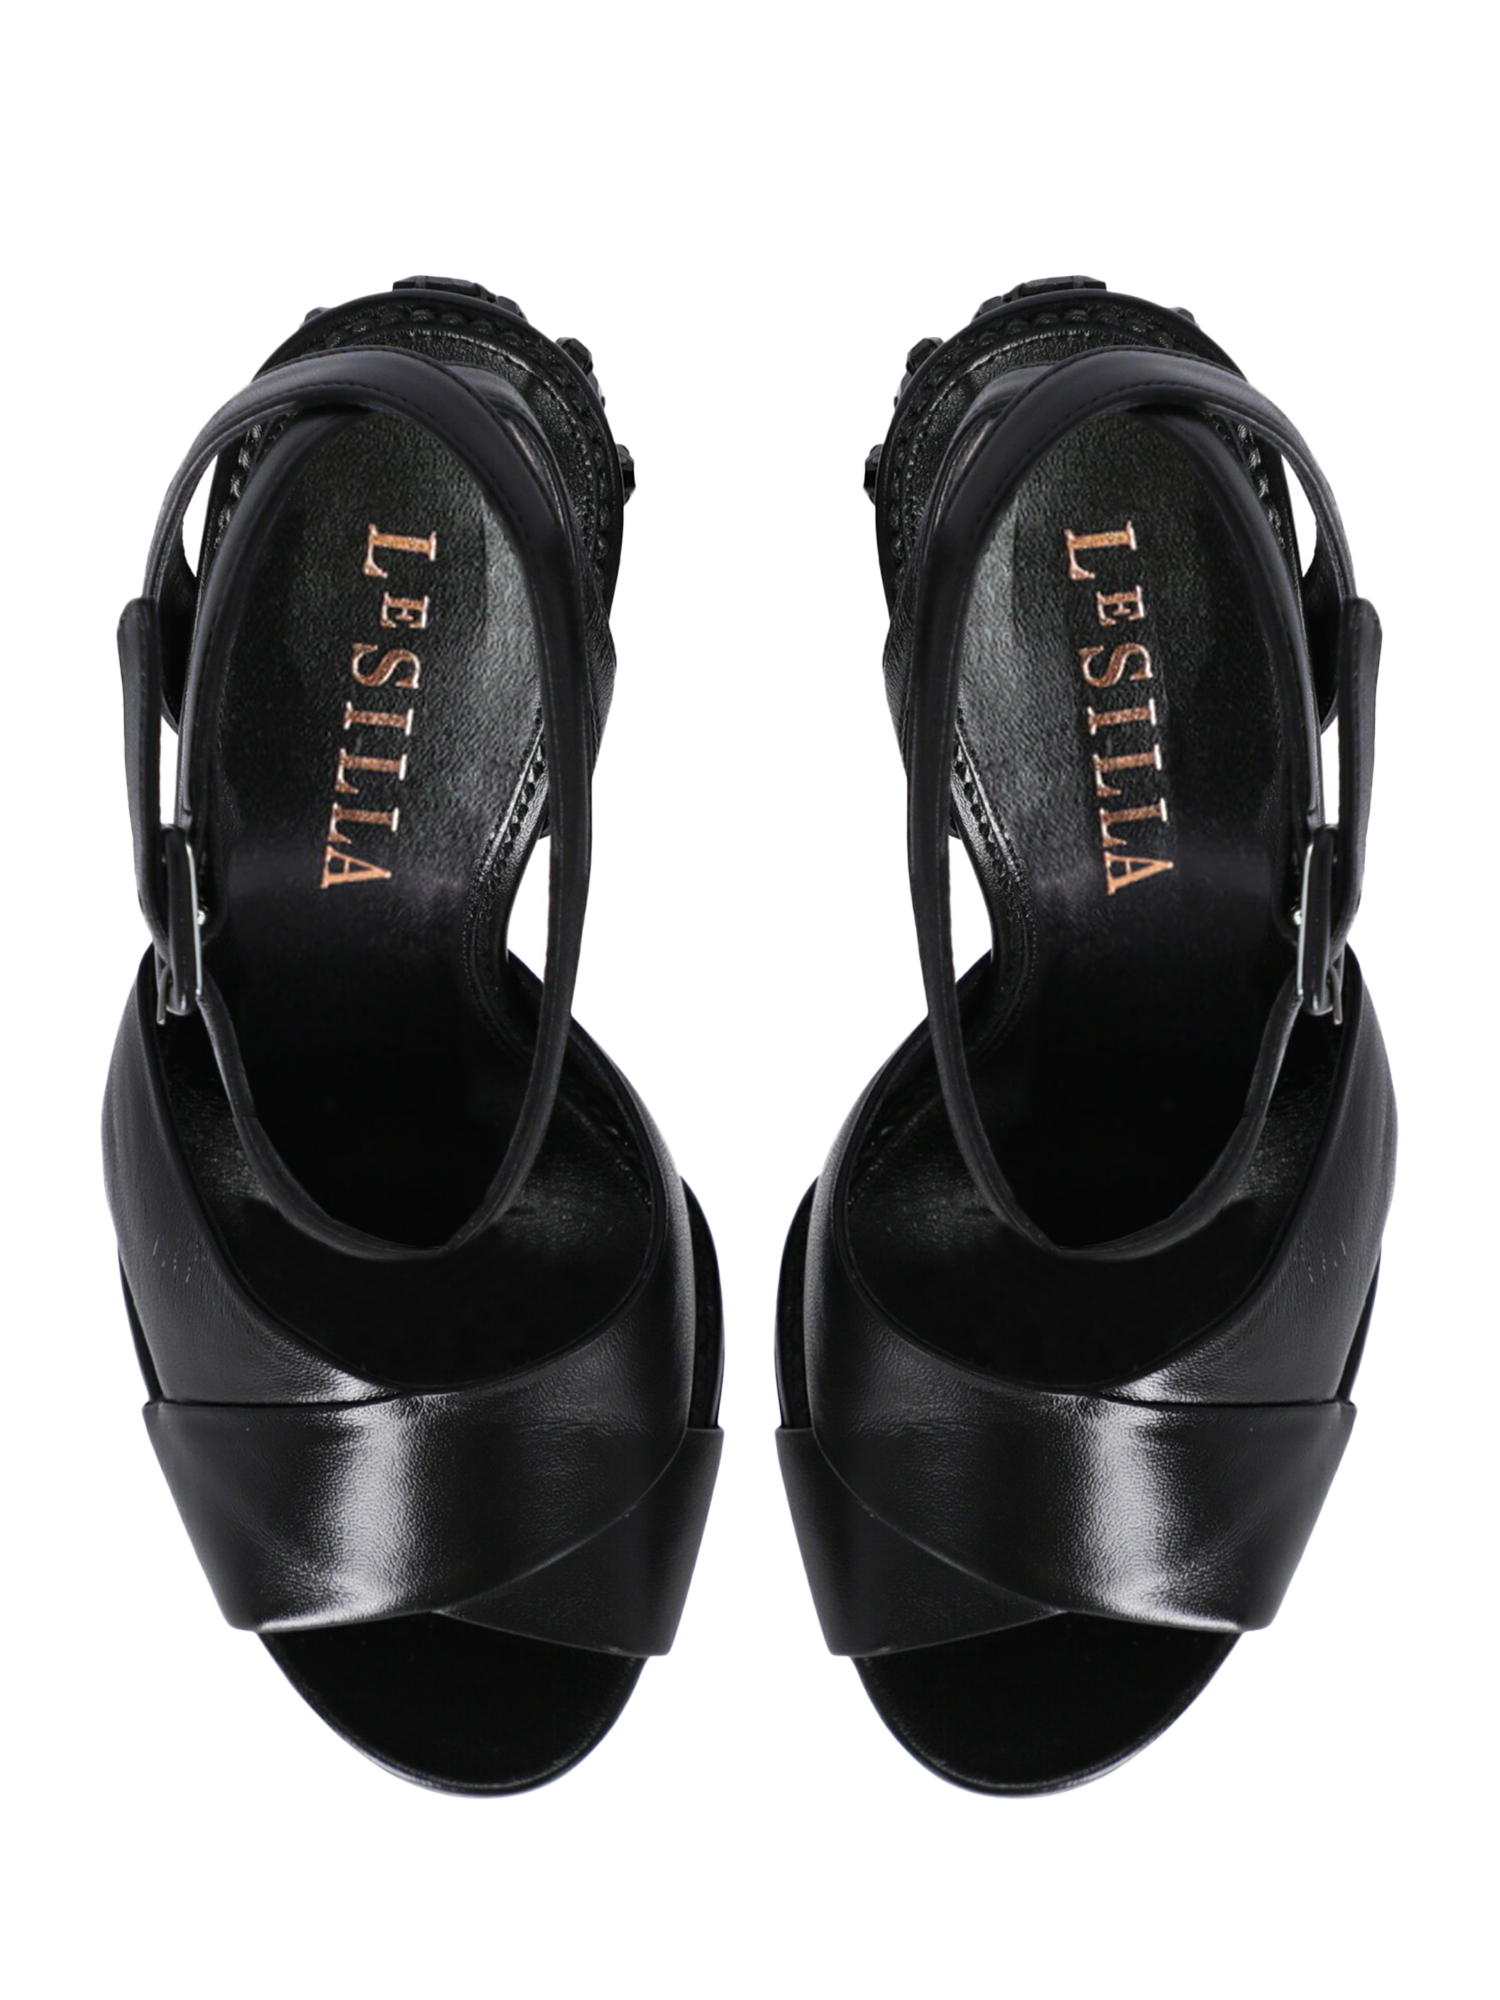 Le Silla Special Price Women Shoes Sandals Black IT 38 | eBay